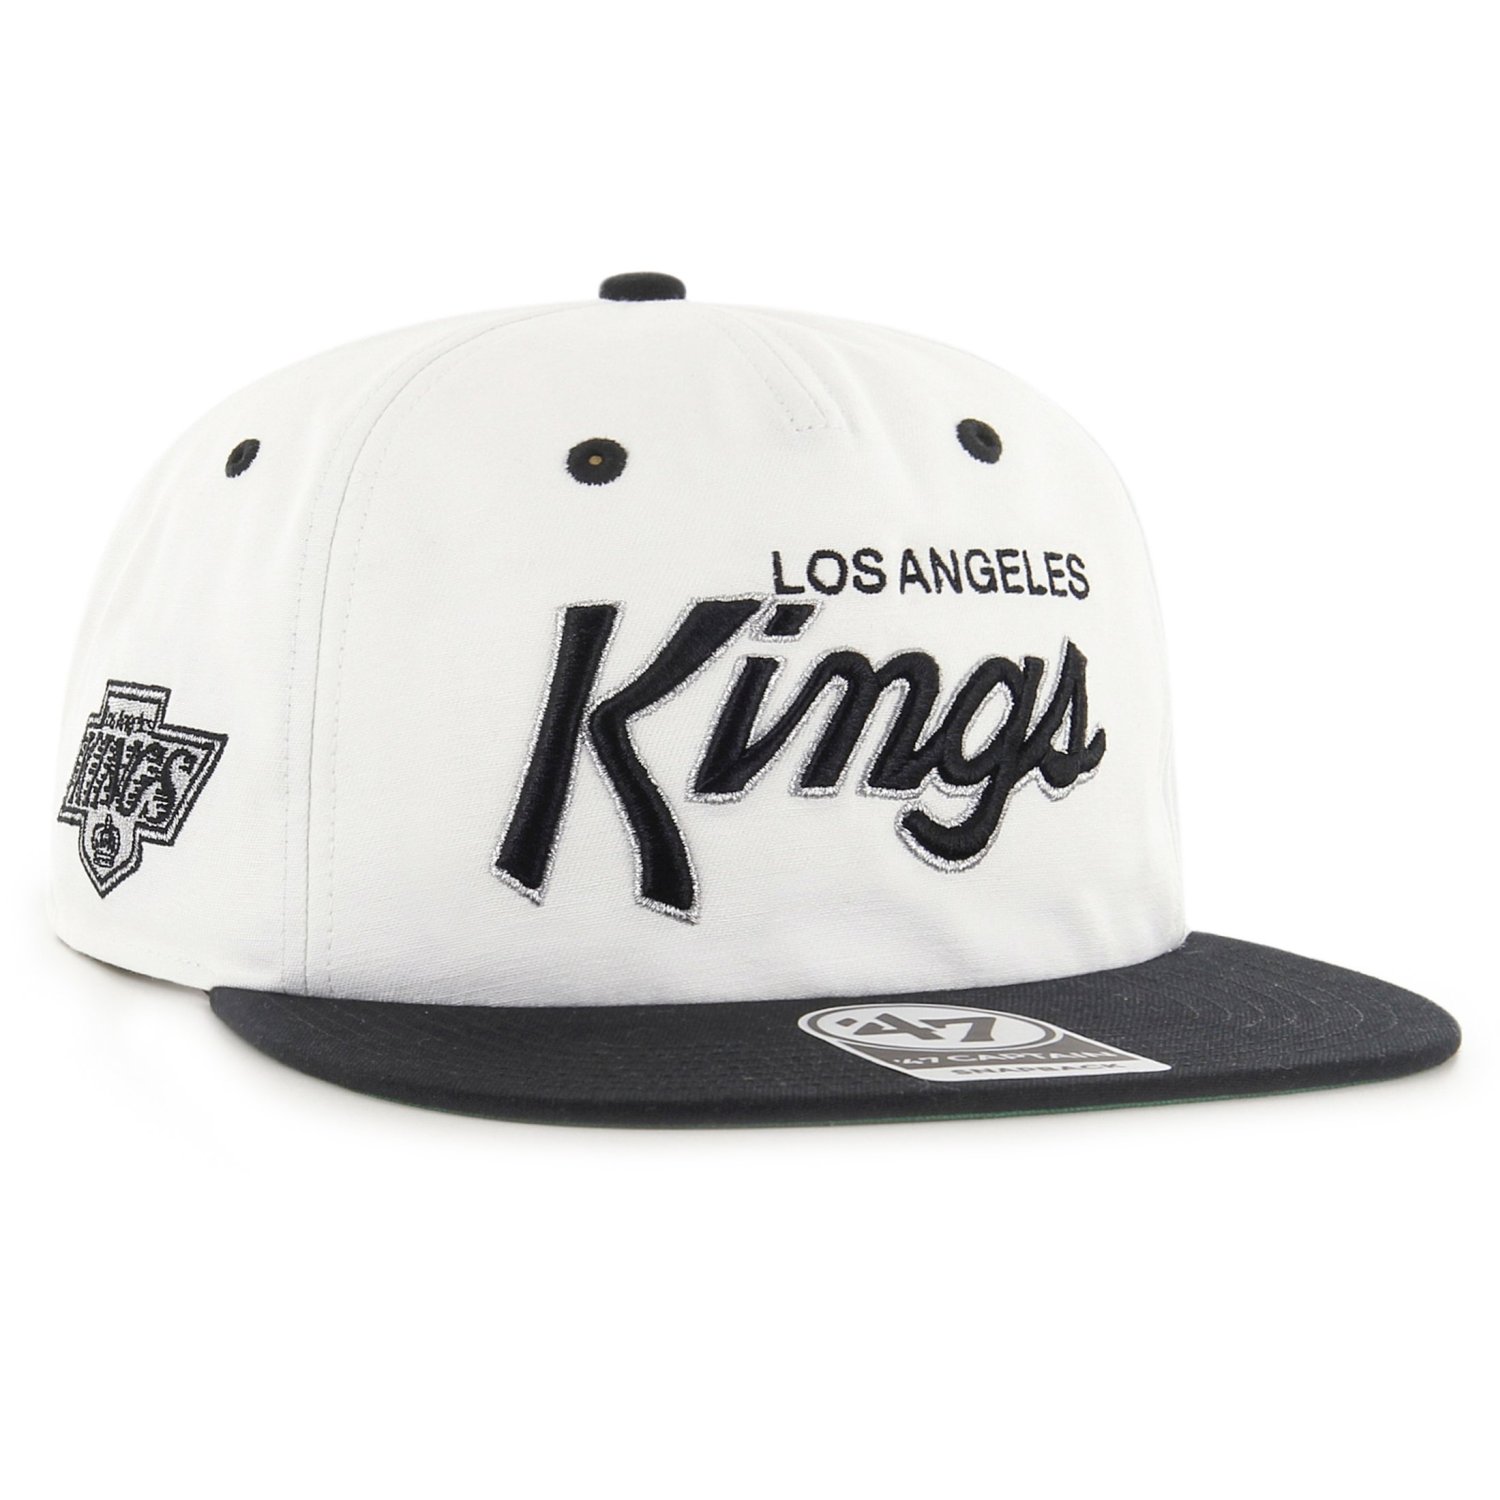 Buy the Snapback cap Crosstown from Los Angeles Kings - Brooklyn Fizz